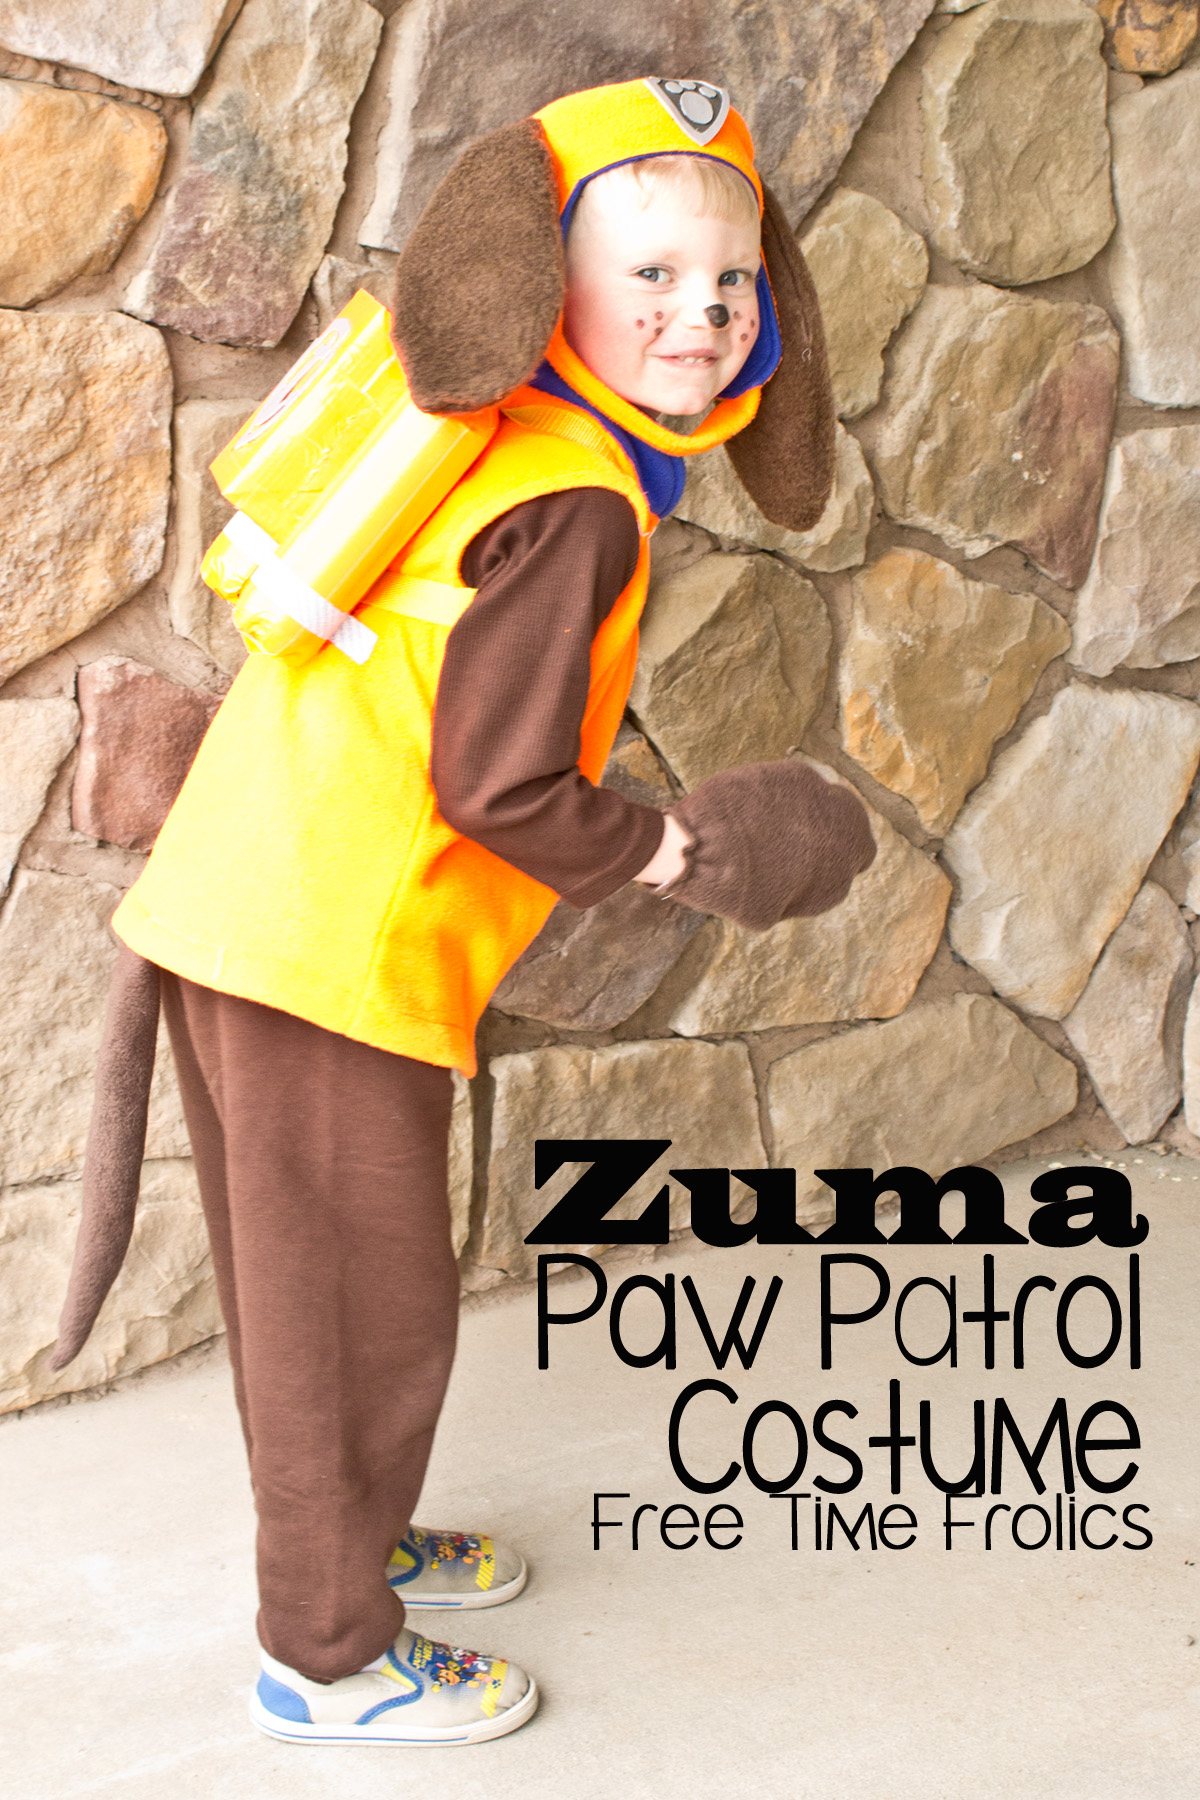 Paw Patrol Zuma Halloween Costume - Free Time Frolics